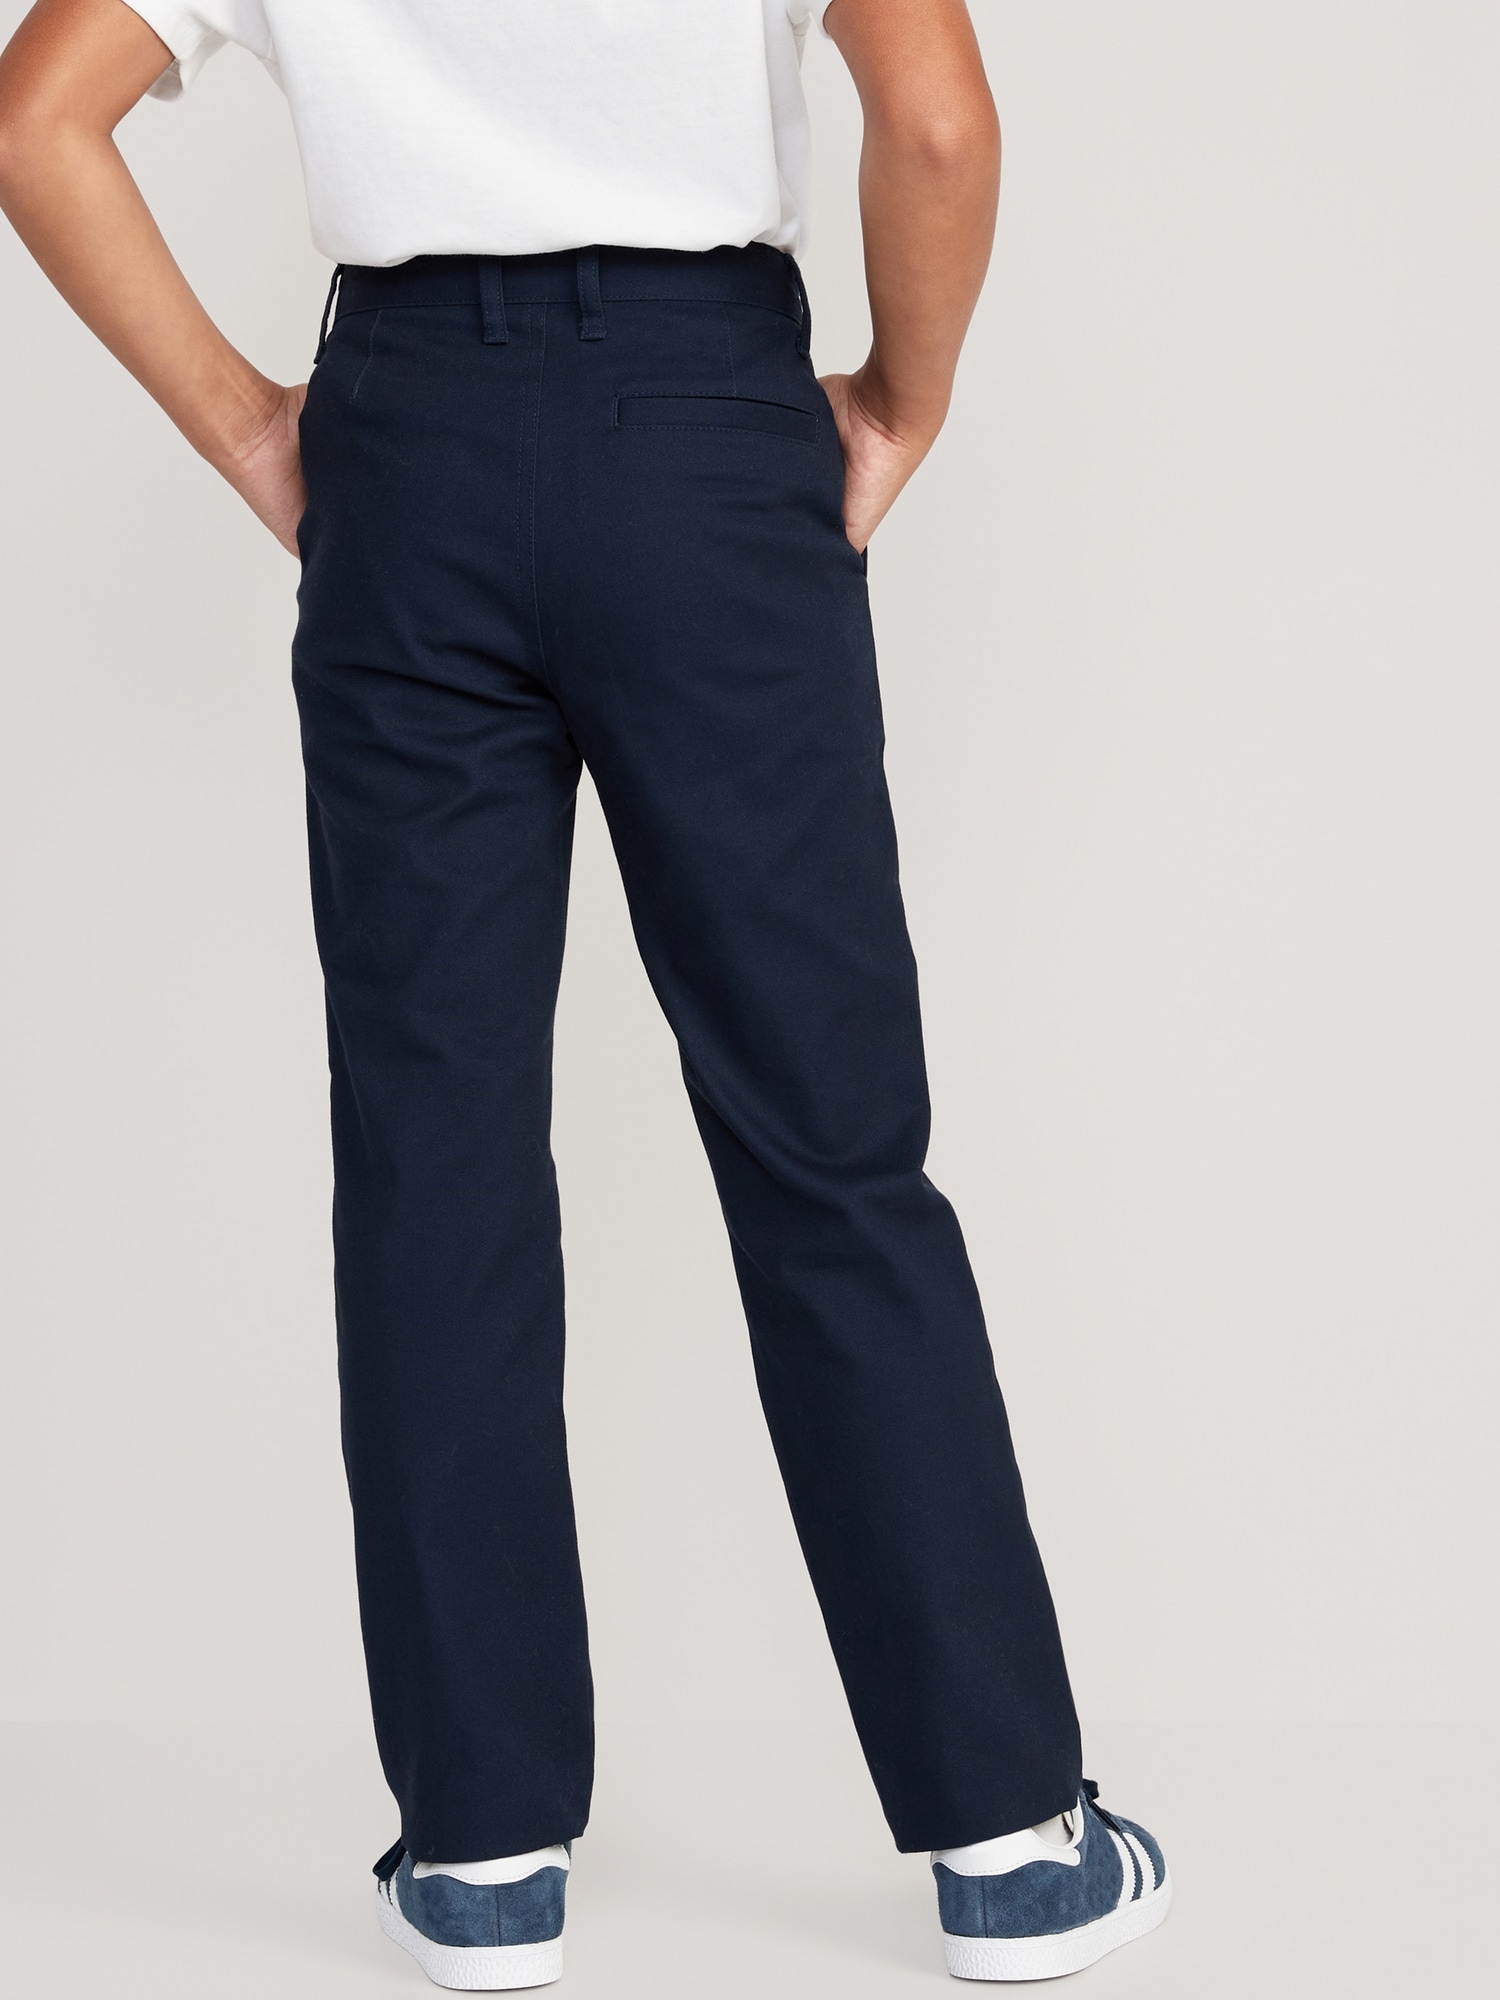 Slim Chino School Uniform Pants for Boys | Old Navy